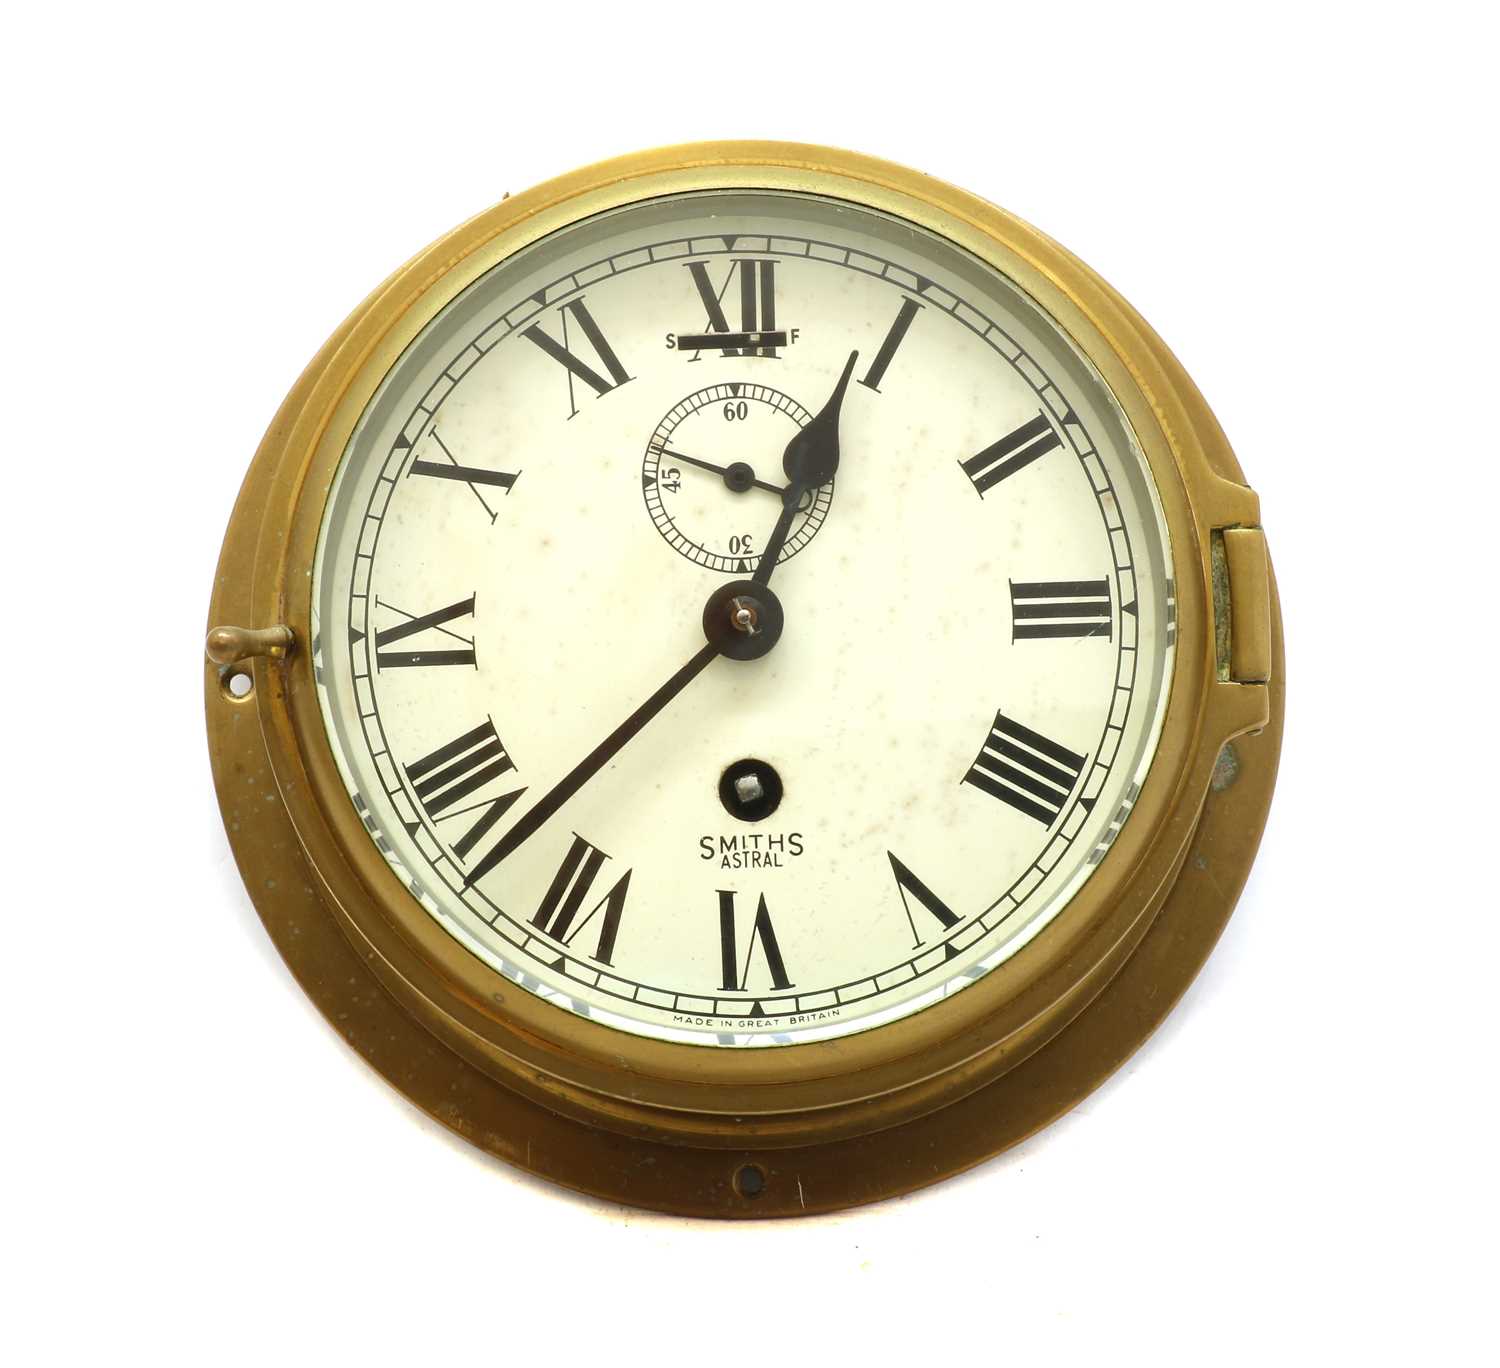 Lot 69 - A Smith Astral bulk head clock